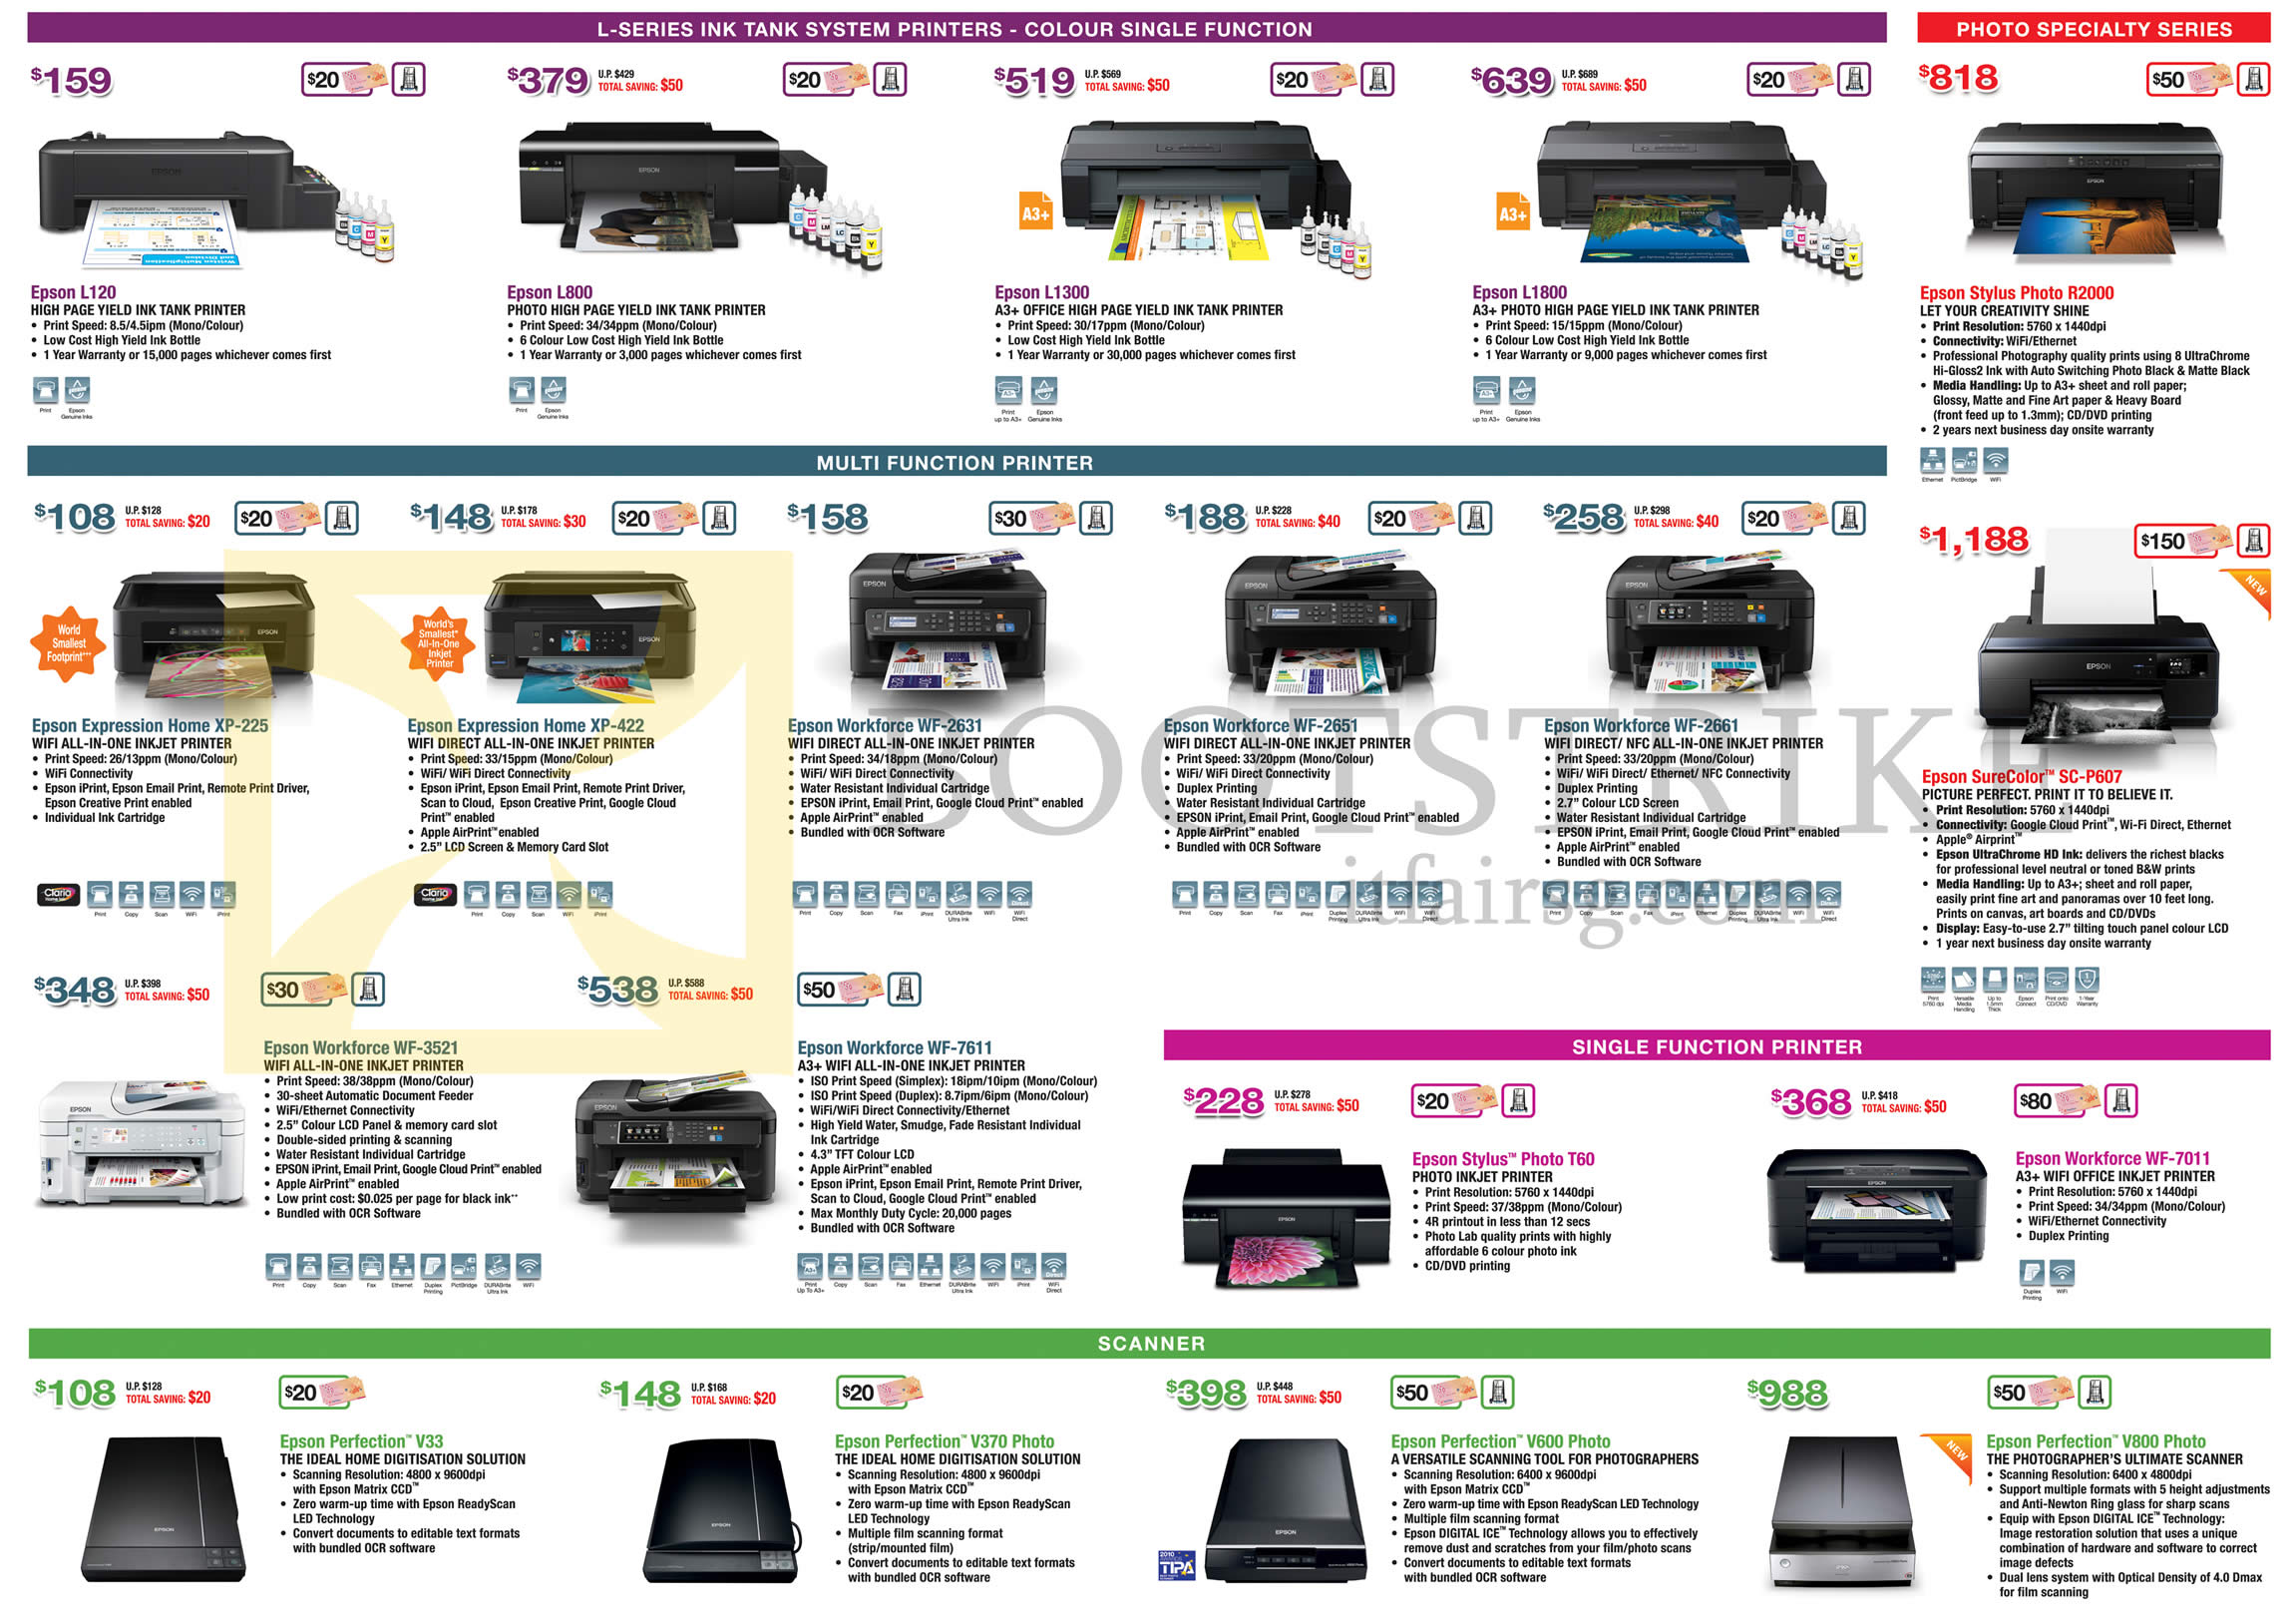 PC SHOW 2015 price list image brochure of Epson Printers, Scanners, L120, L800, L1300, L1800, Expression Home XP-225 XP-422, Workforce WF-2631, WF-2651, Wf-3521, WF-7611, Perfection V33, V370 Photo